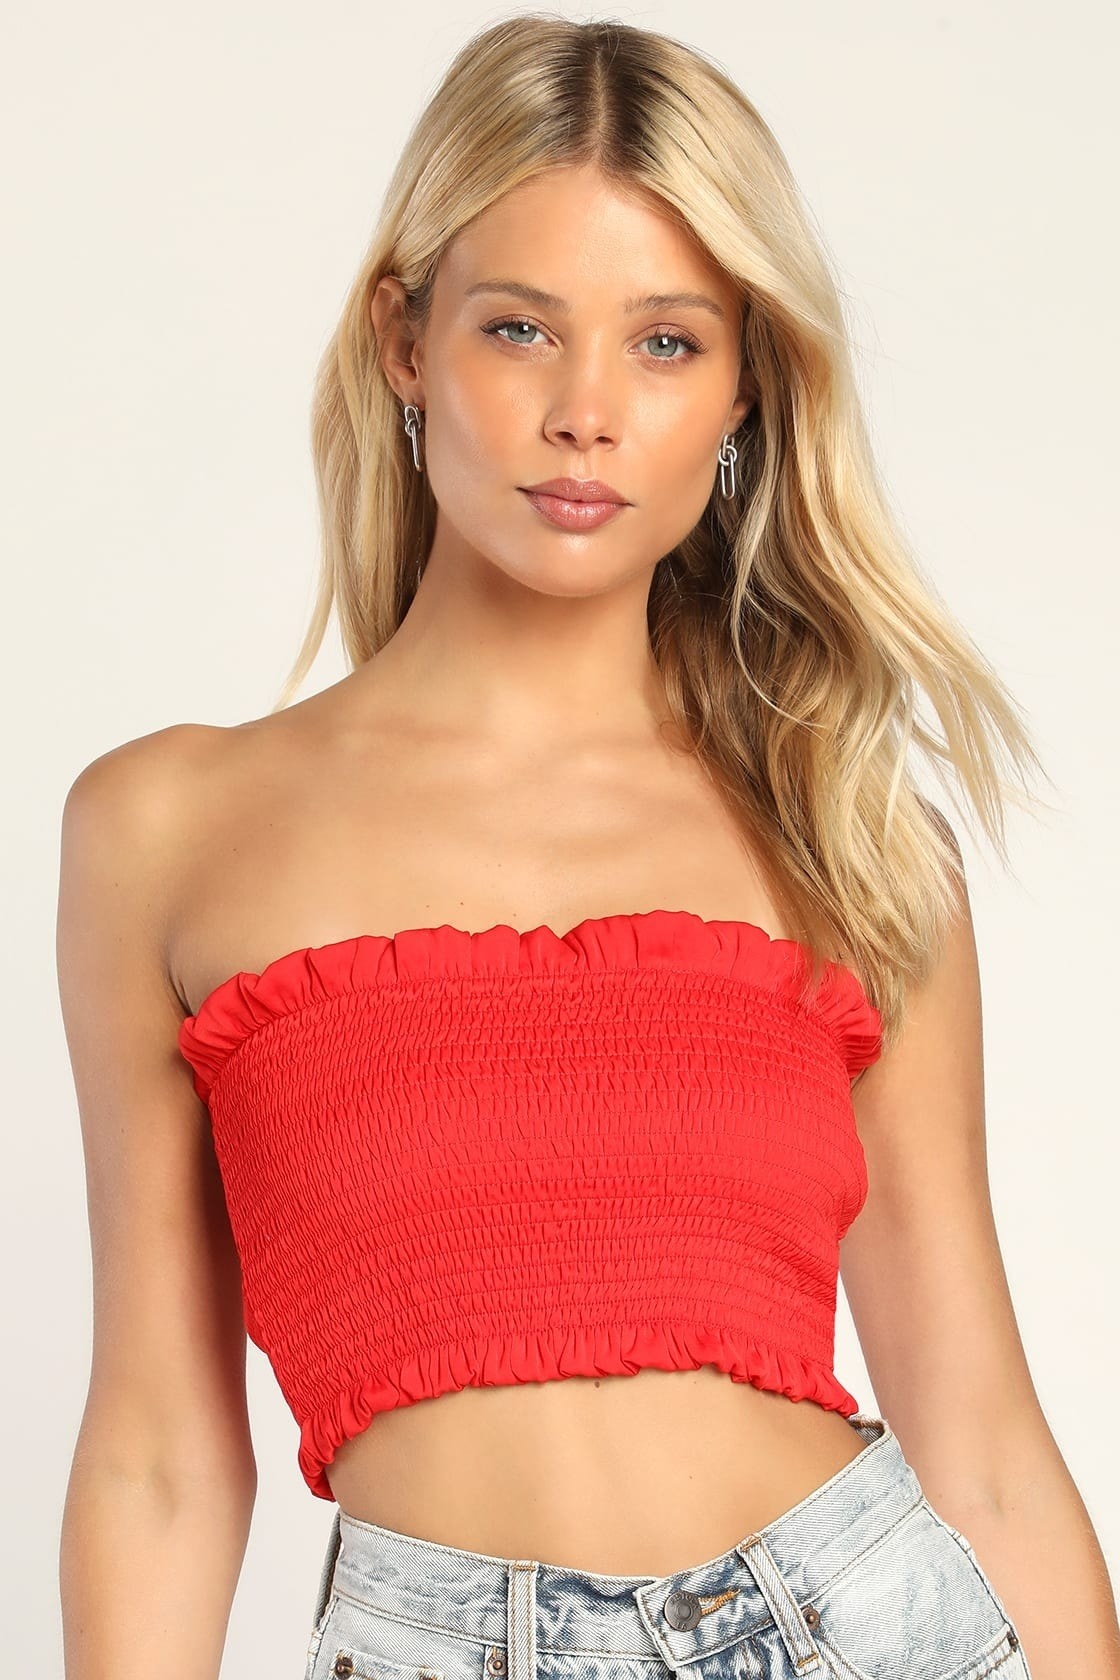 Model wearing red smocked tube top